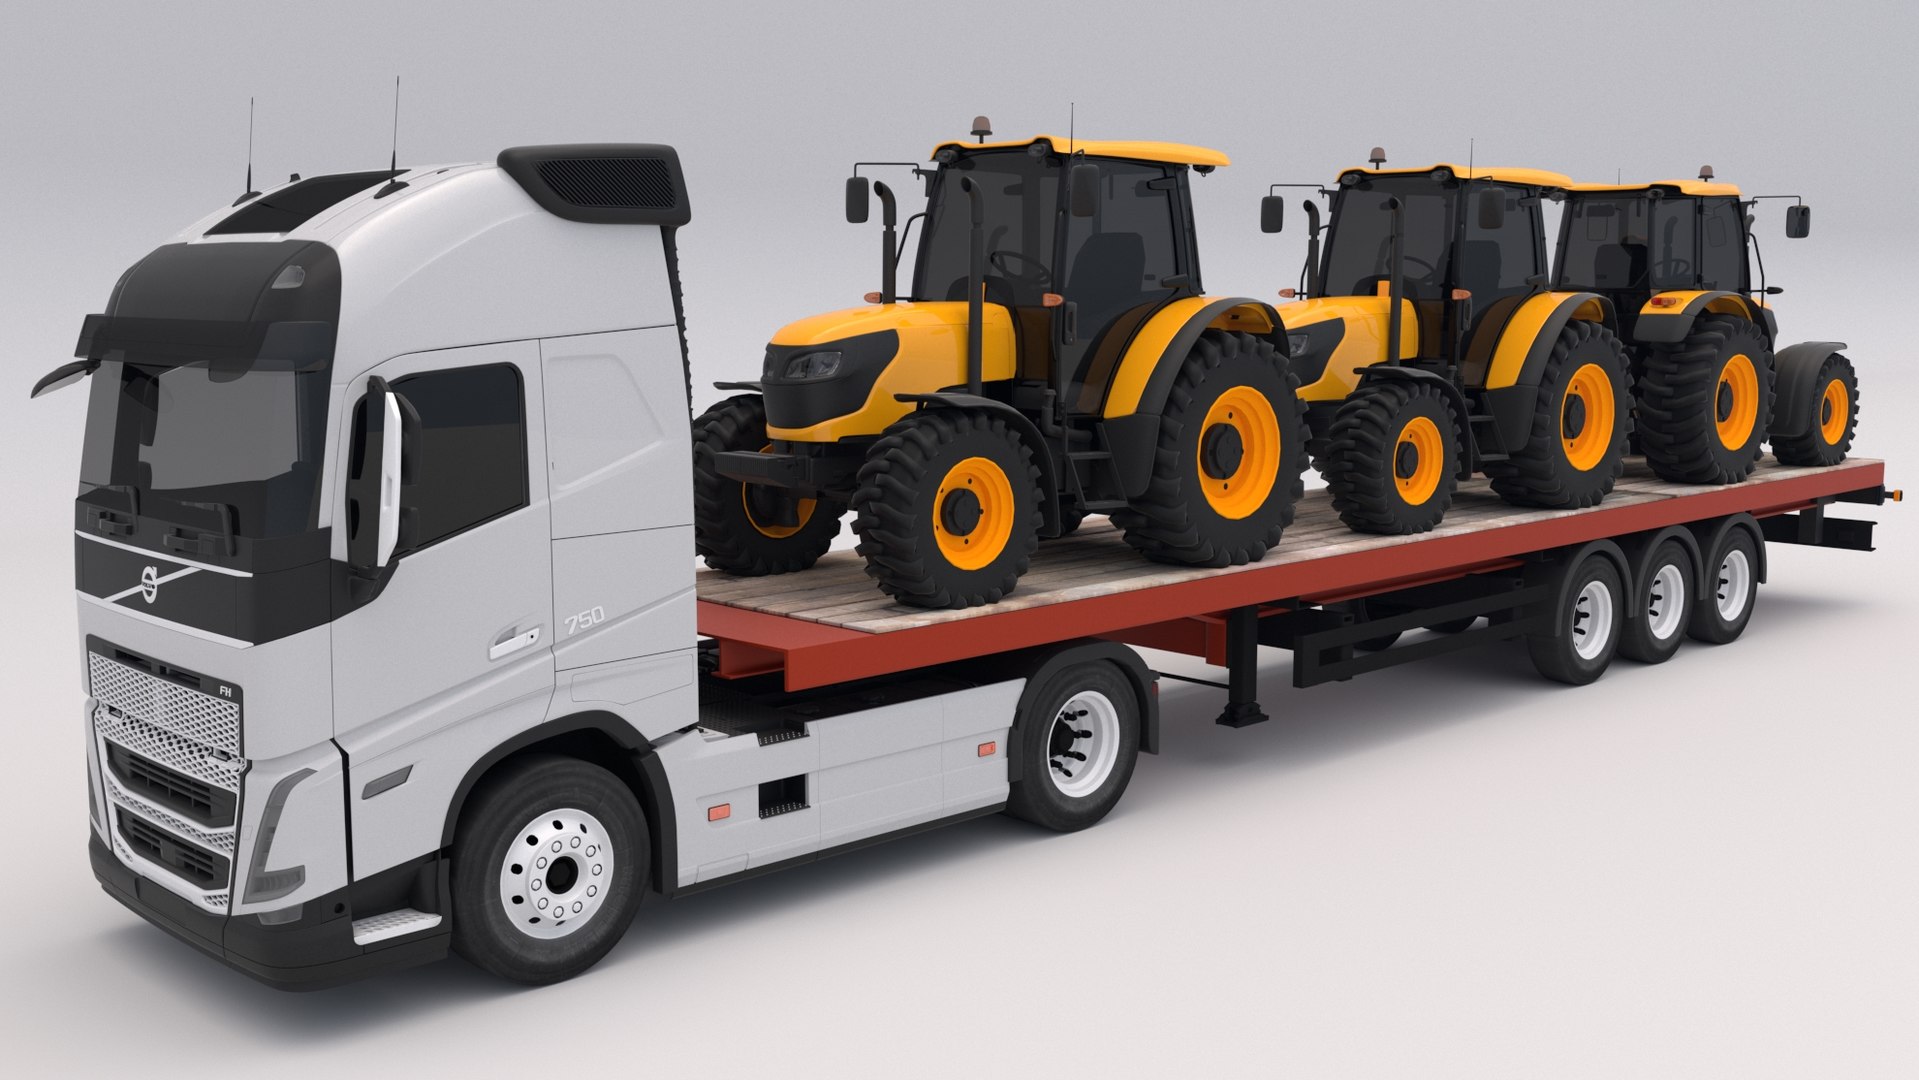 Fh16 tractor trailer 3D model TurboSquid 1624637